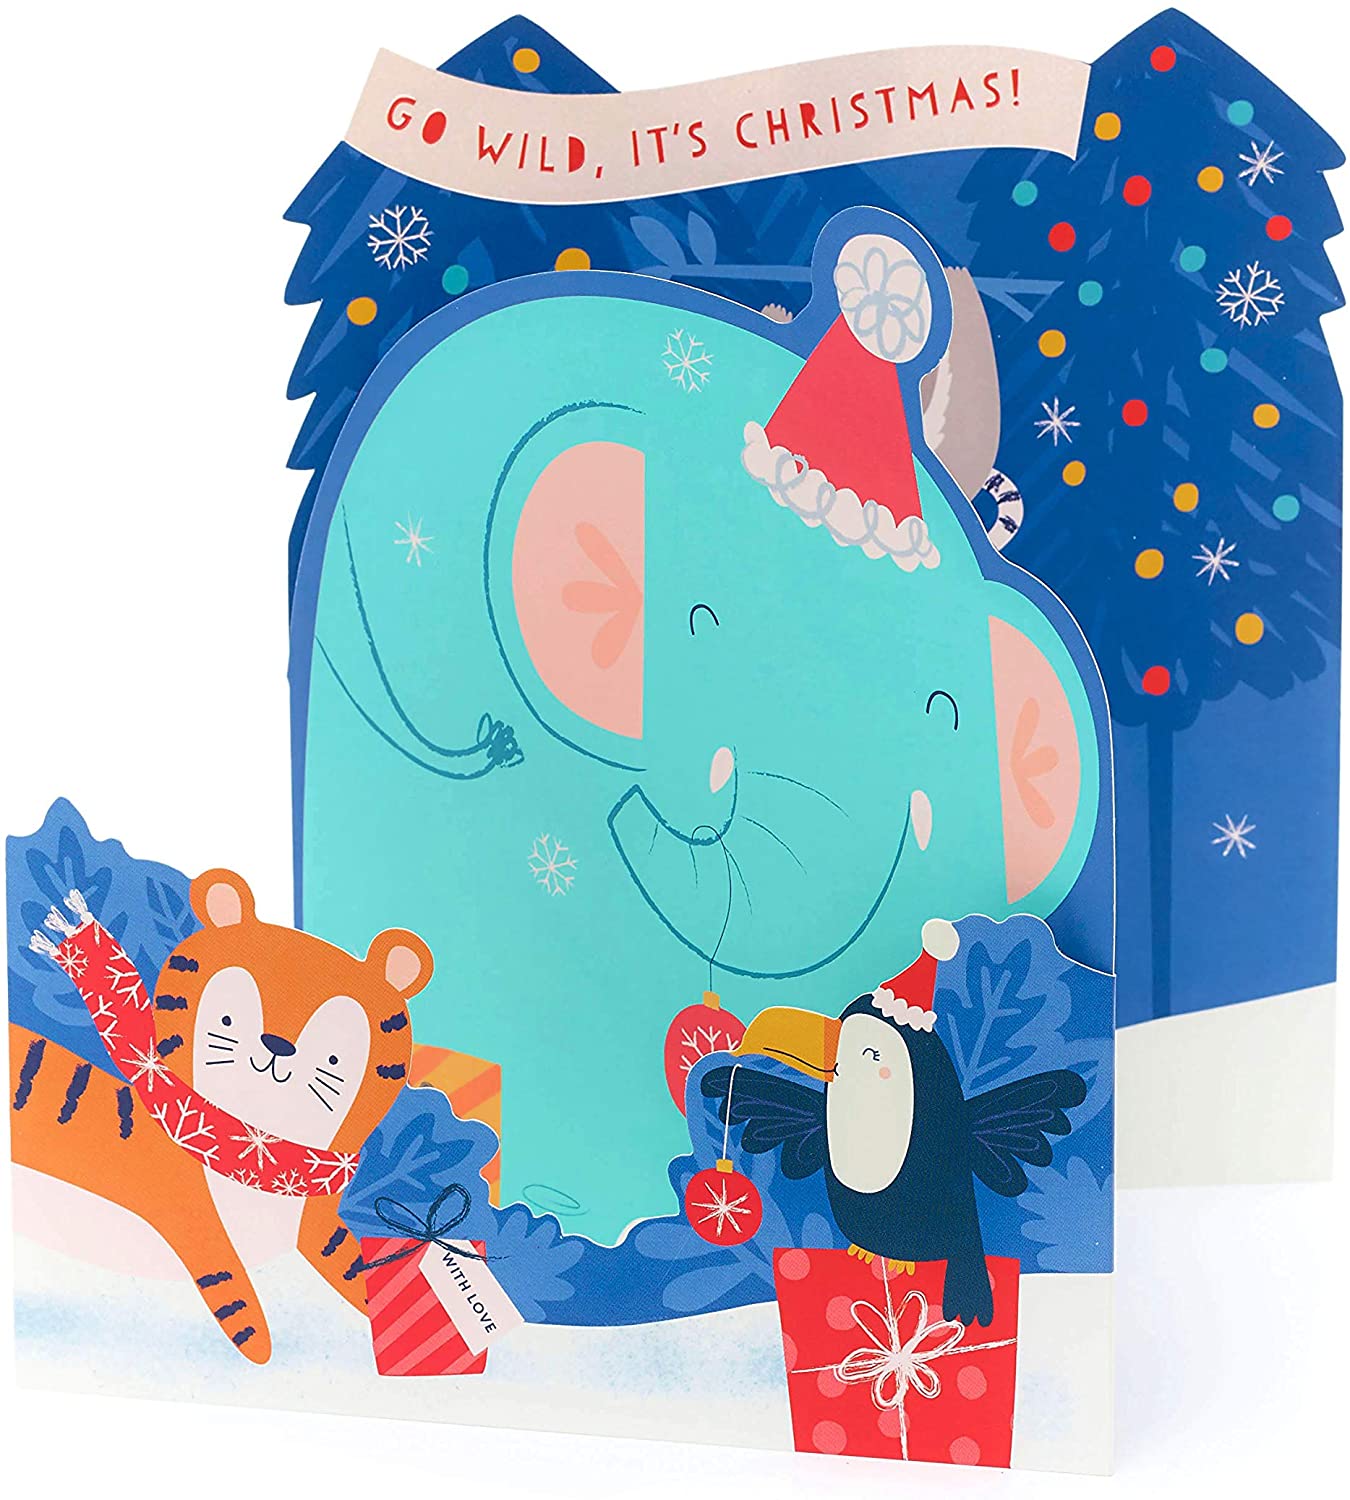 Kids Christmas Card Go Wild Cute Elephant Design 